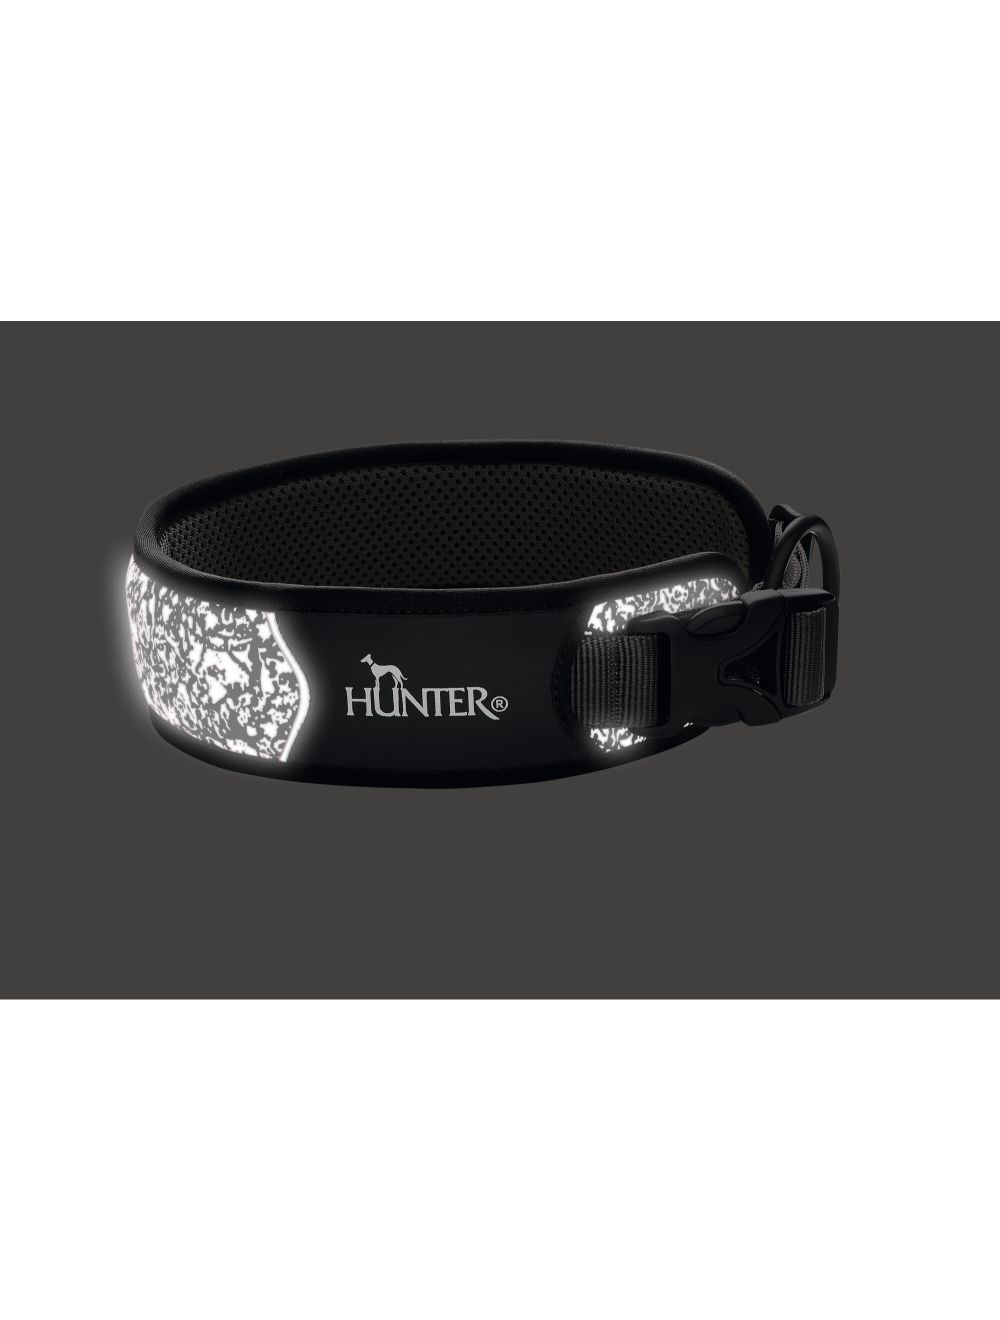 Hunter - Collar Divo Reflect L, black/grey - (68966)